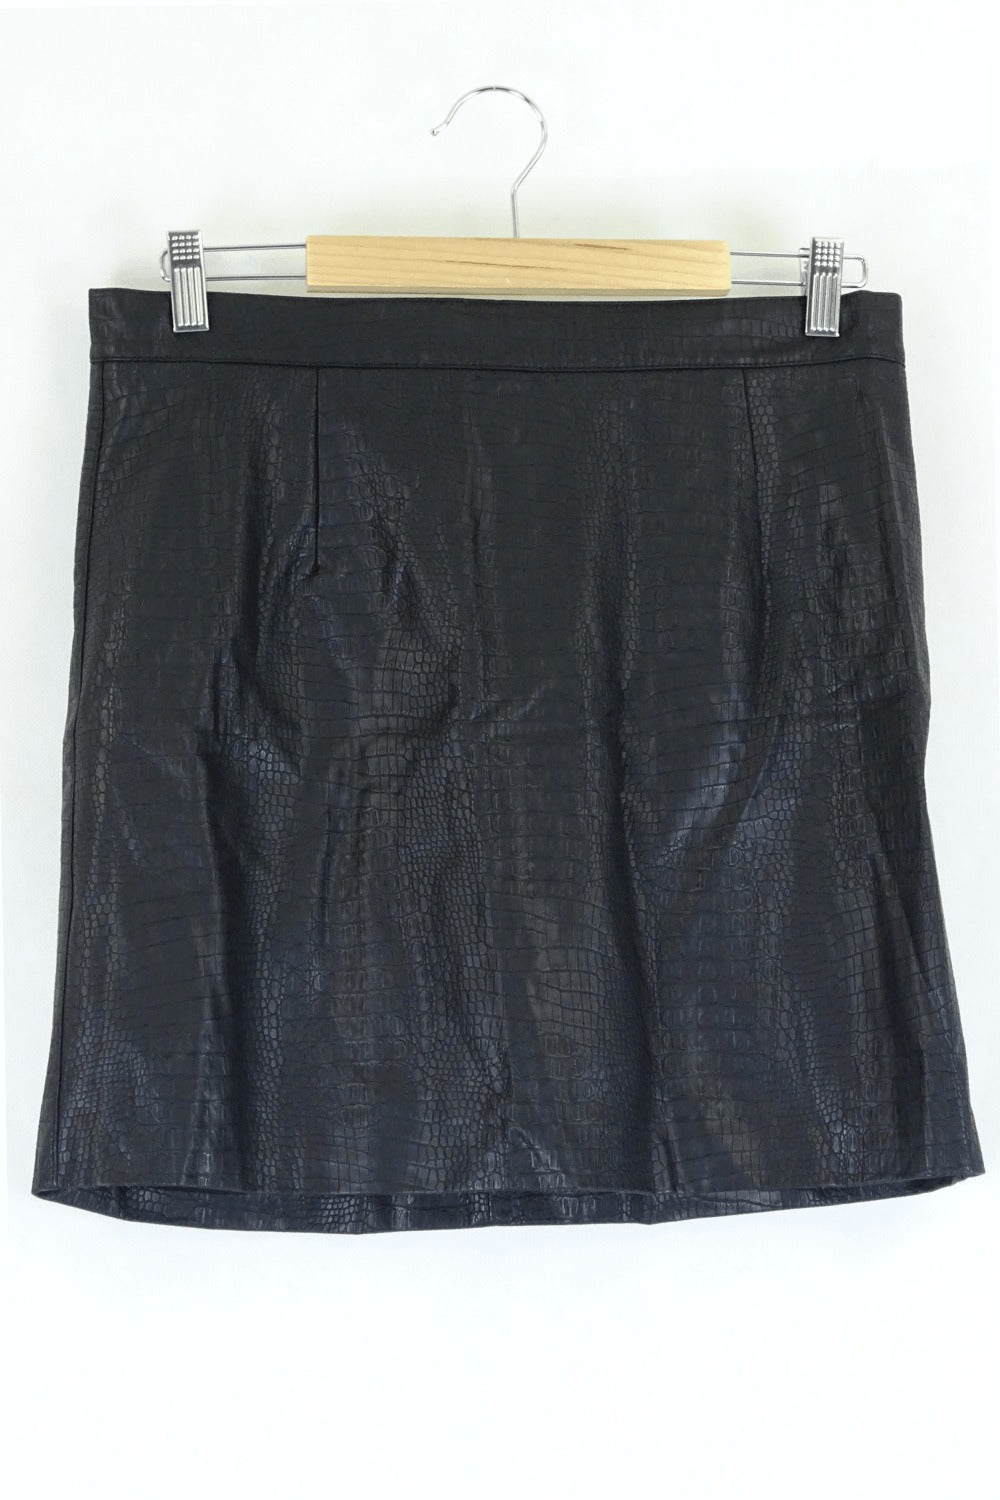 Bardot Black Faux Leather Skirt 14